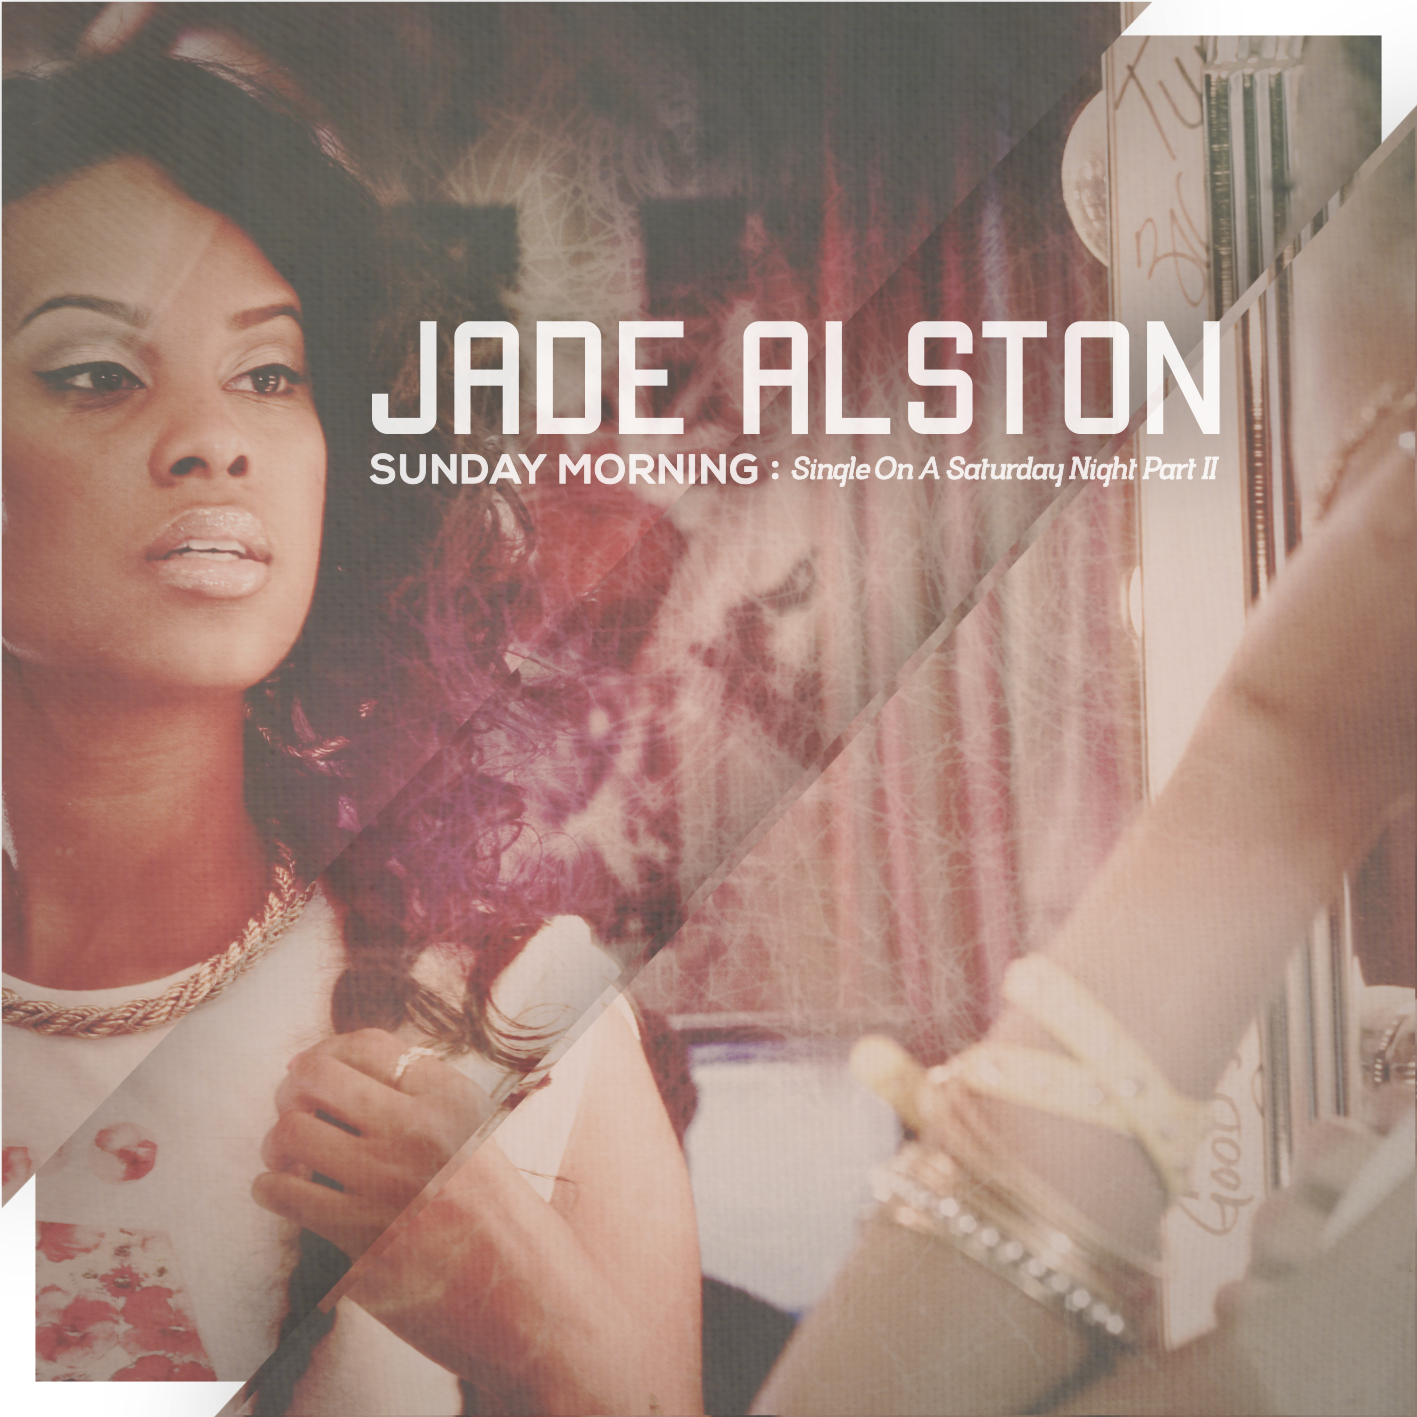 jade-alston-sunday-morning-single-on-a-saturday-night-pt-2-ep-cover-HHS1987-2013 Jade Alston (@JadeAlston) - Sunday Morning: Single on A Saturday Night Pt. 2 (EP)  